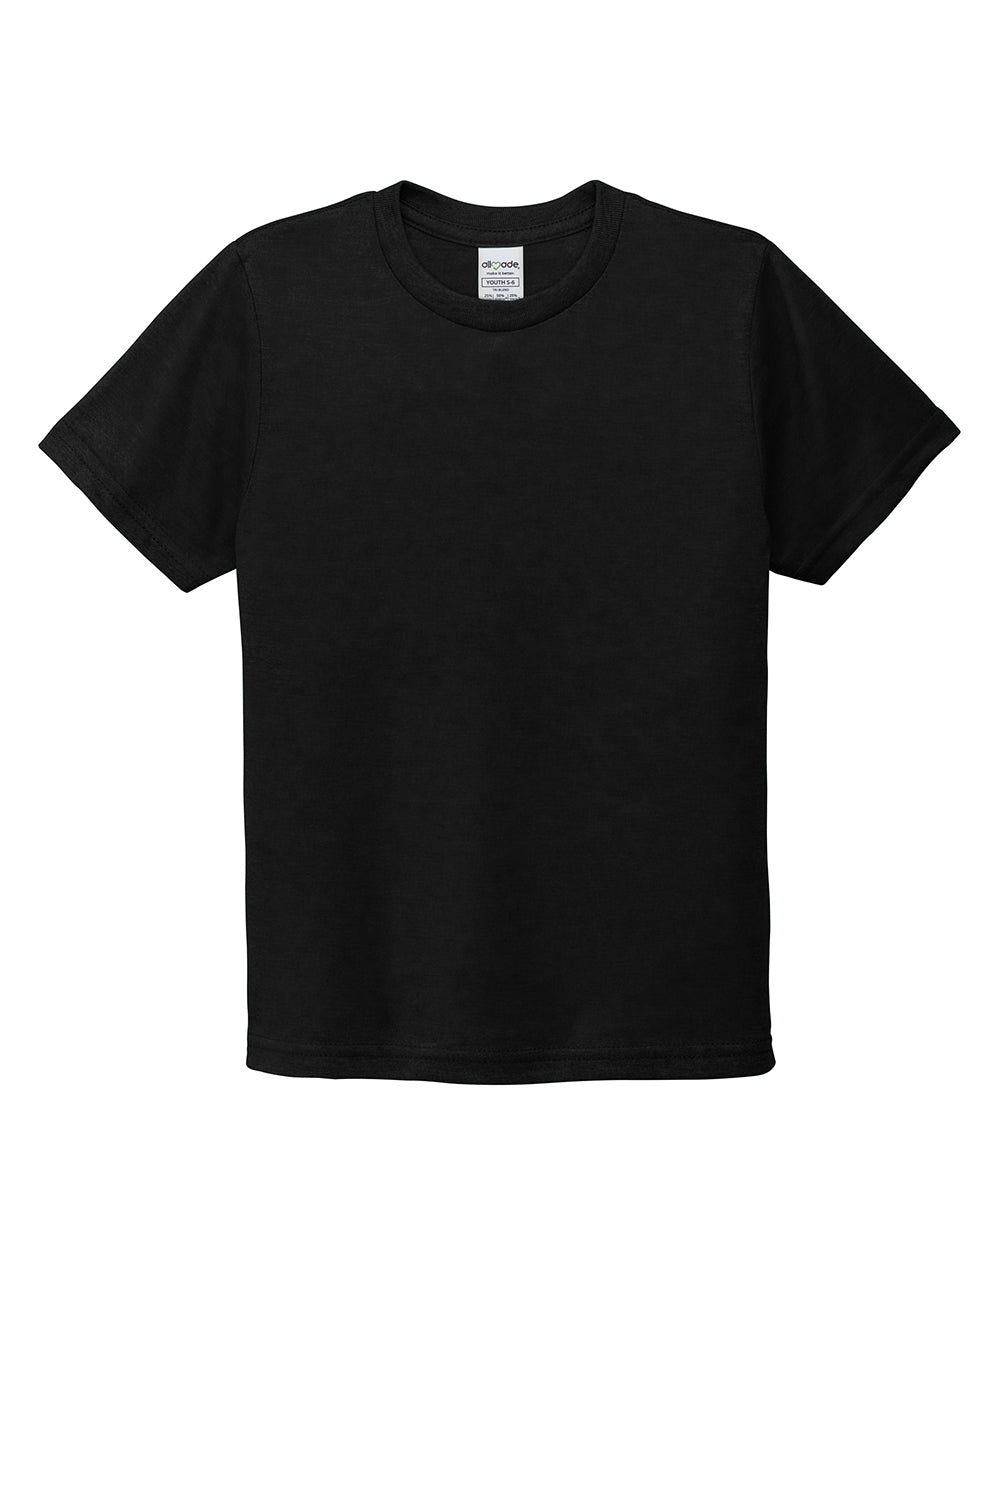 Allmade AL207 Youth Short Sleeve Crewneck T-Shirt Deep Black Flat Front